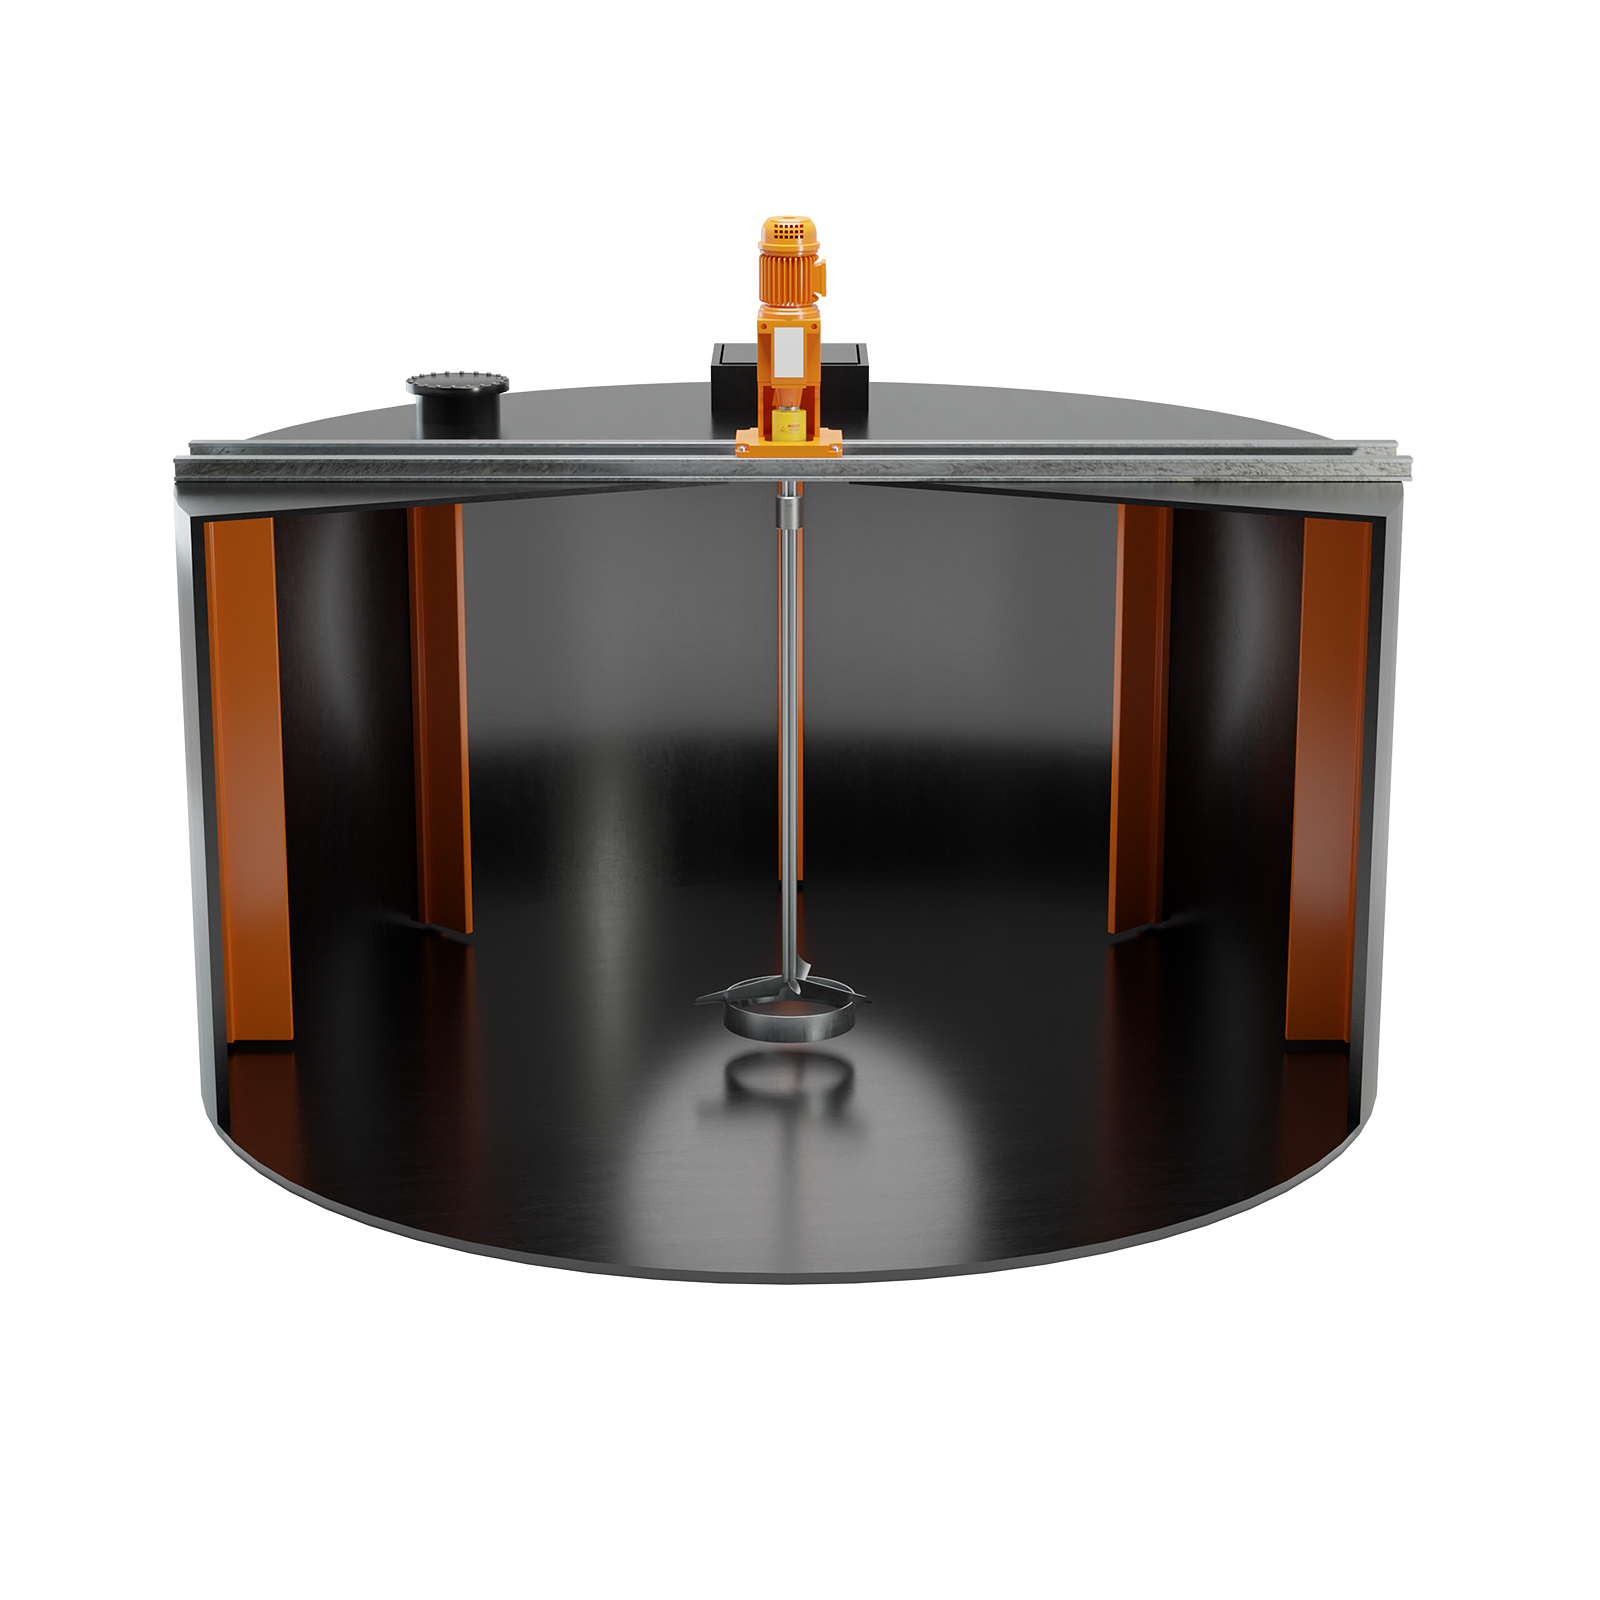 Black mixing tank with orange panels inside